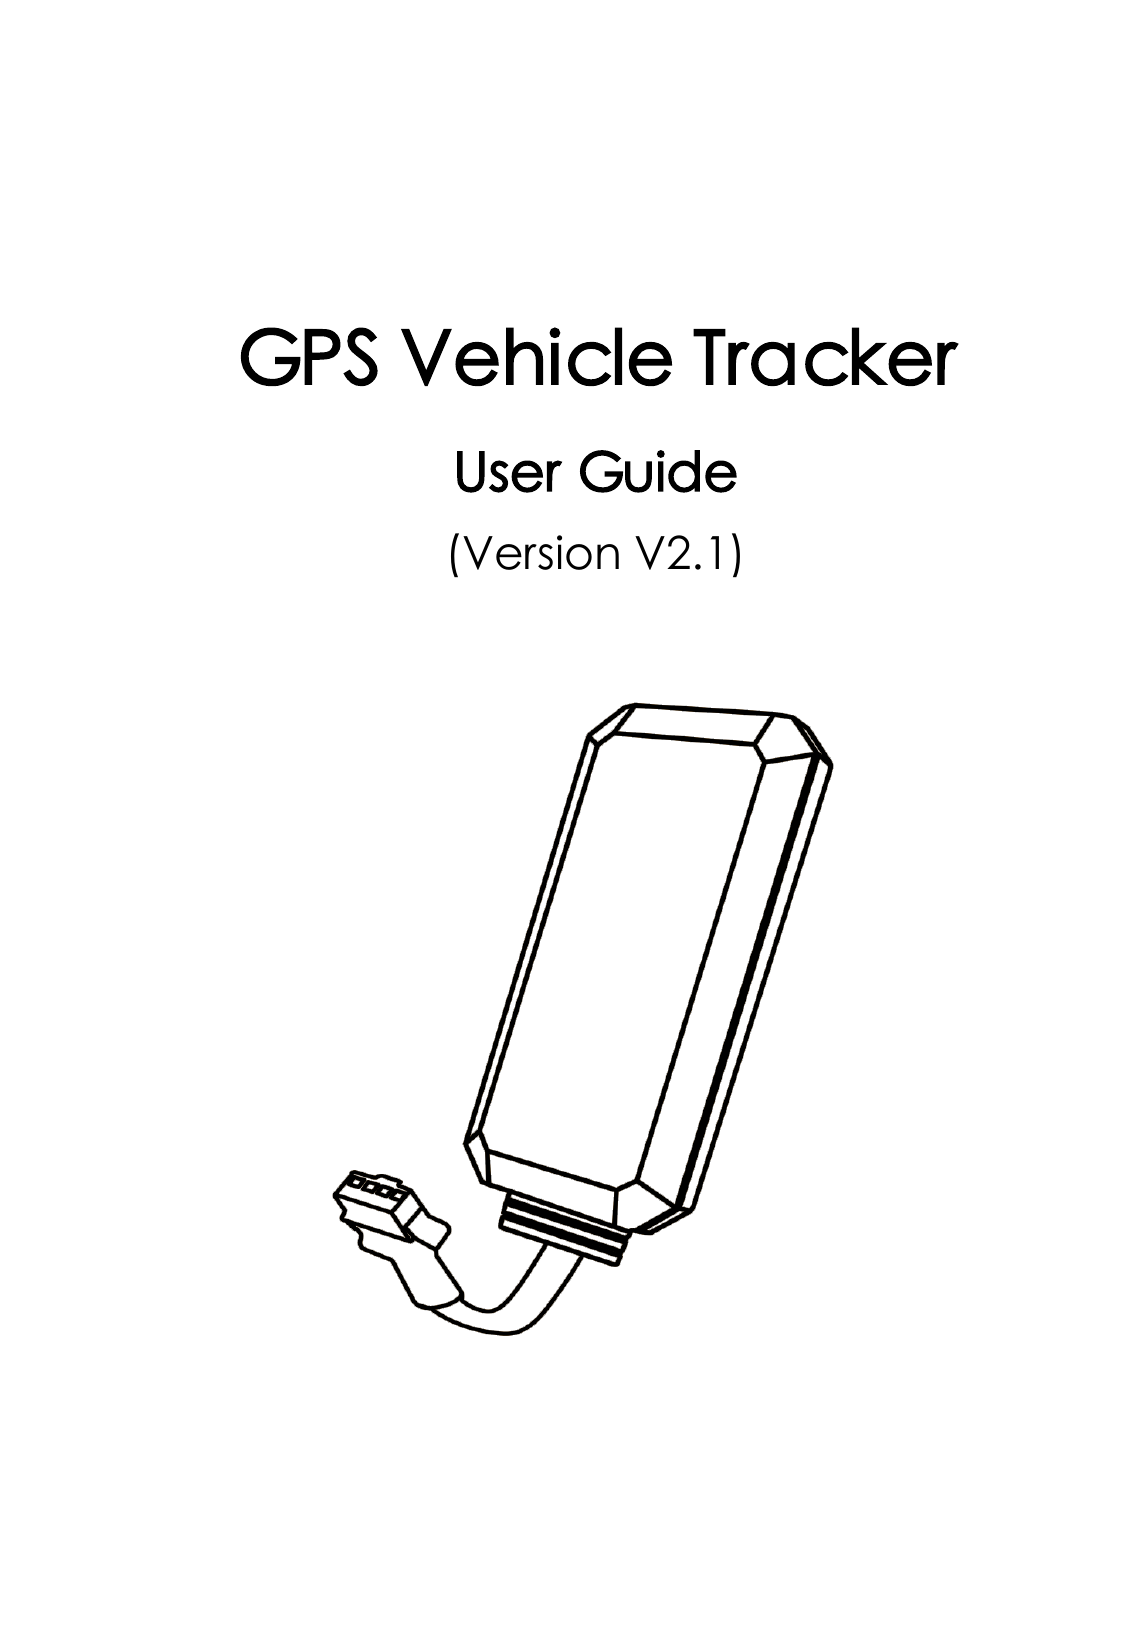    GPS Vehicle Tracker User Guide (Version V2.1)                             